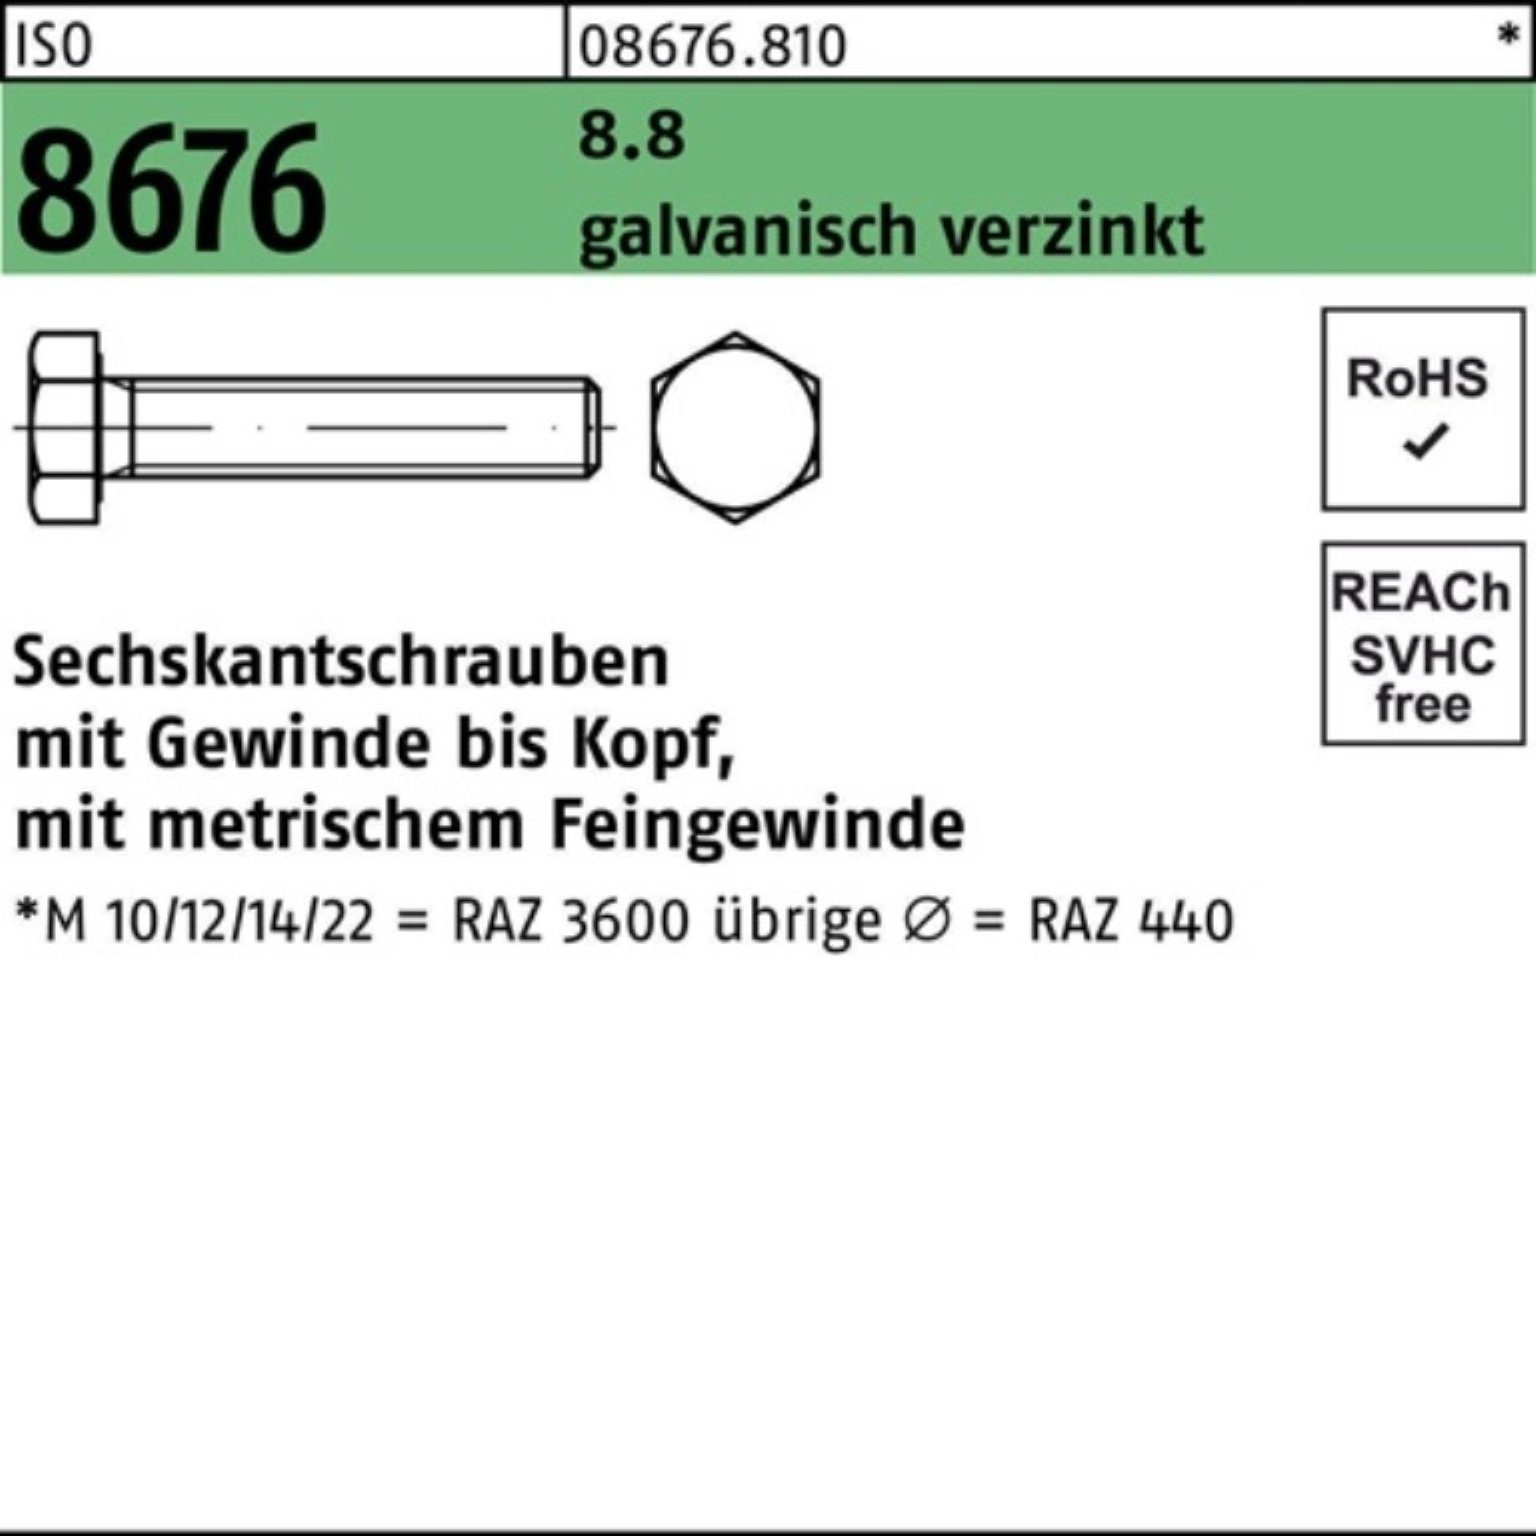 Reyher Sechskantschraube M12x1,25x VG 8676 ISO 100er 35 Pack galv.verz. Sechskantschraube 1 8.8